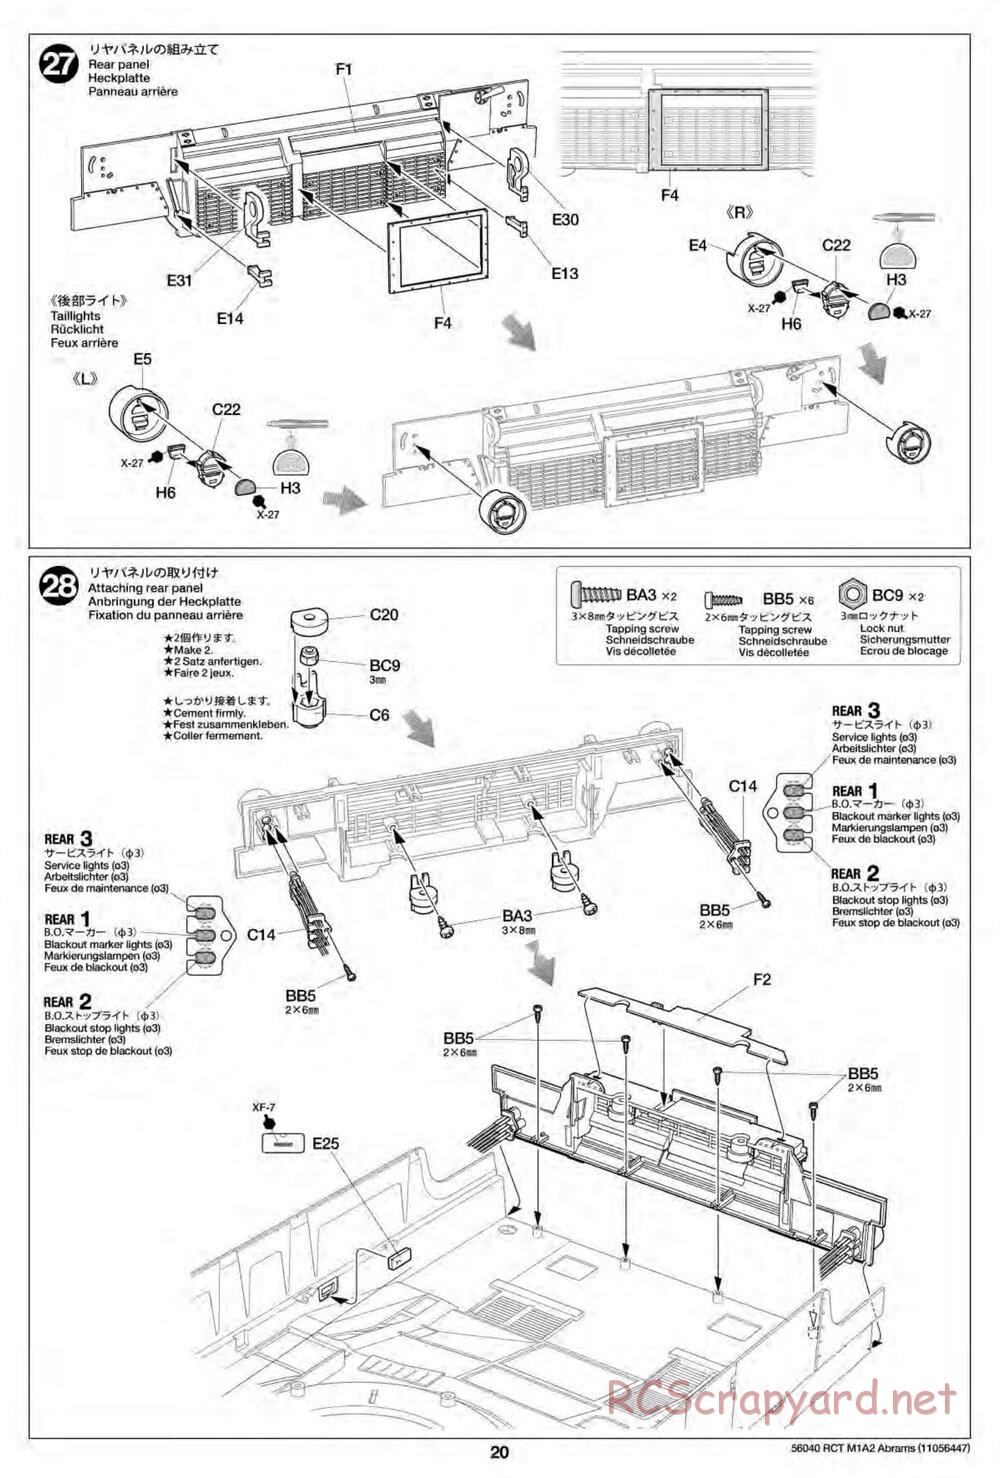 Tamiya - U.S. Main Battle Tank M1A2 Abrams - 1/16 Scale Chassis - Manual - Page 20